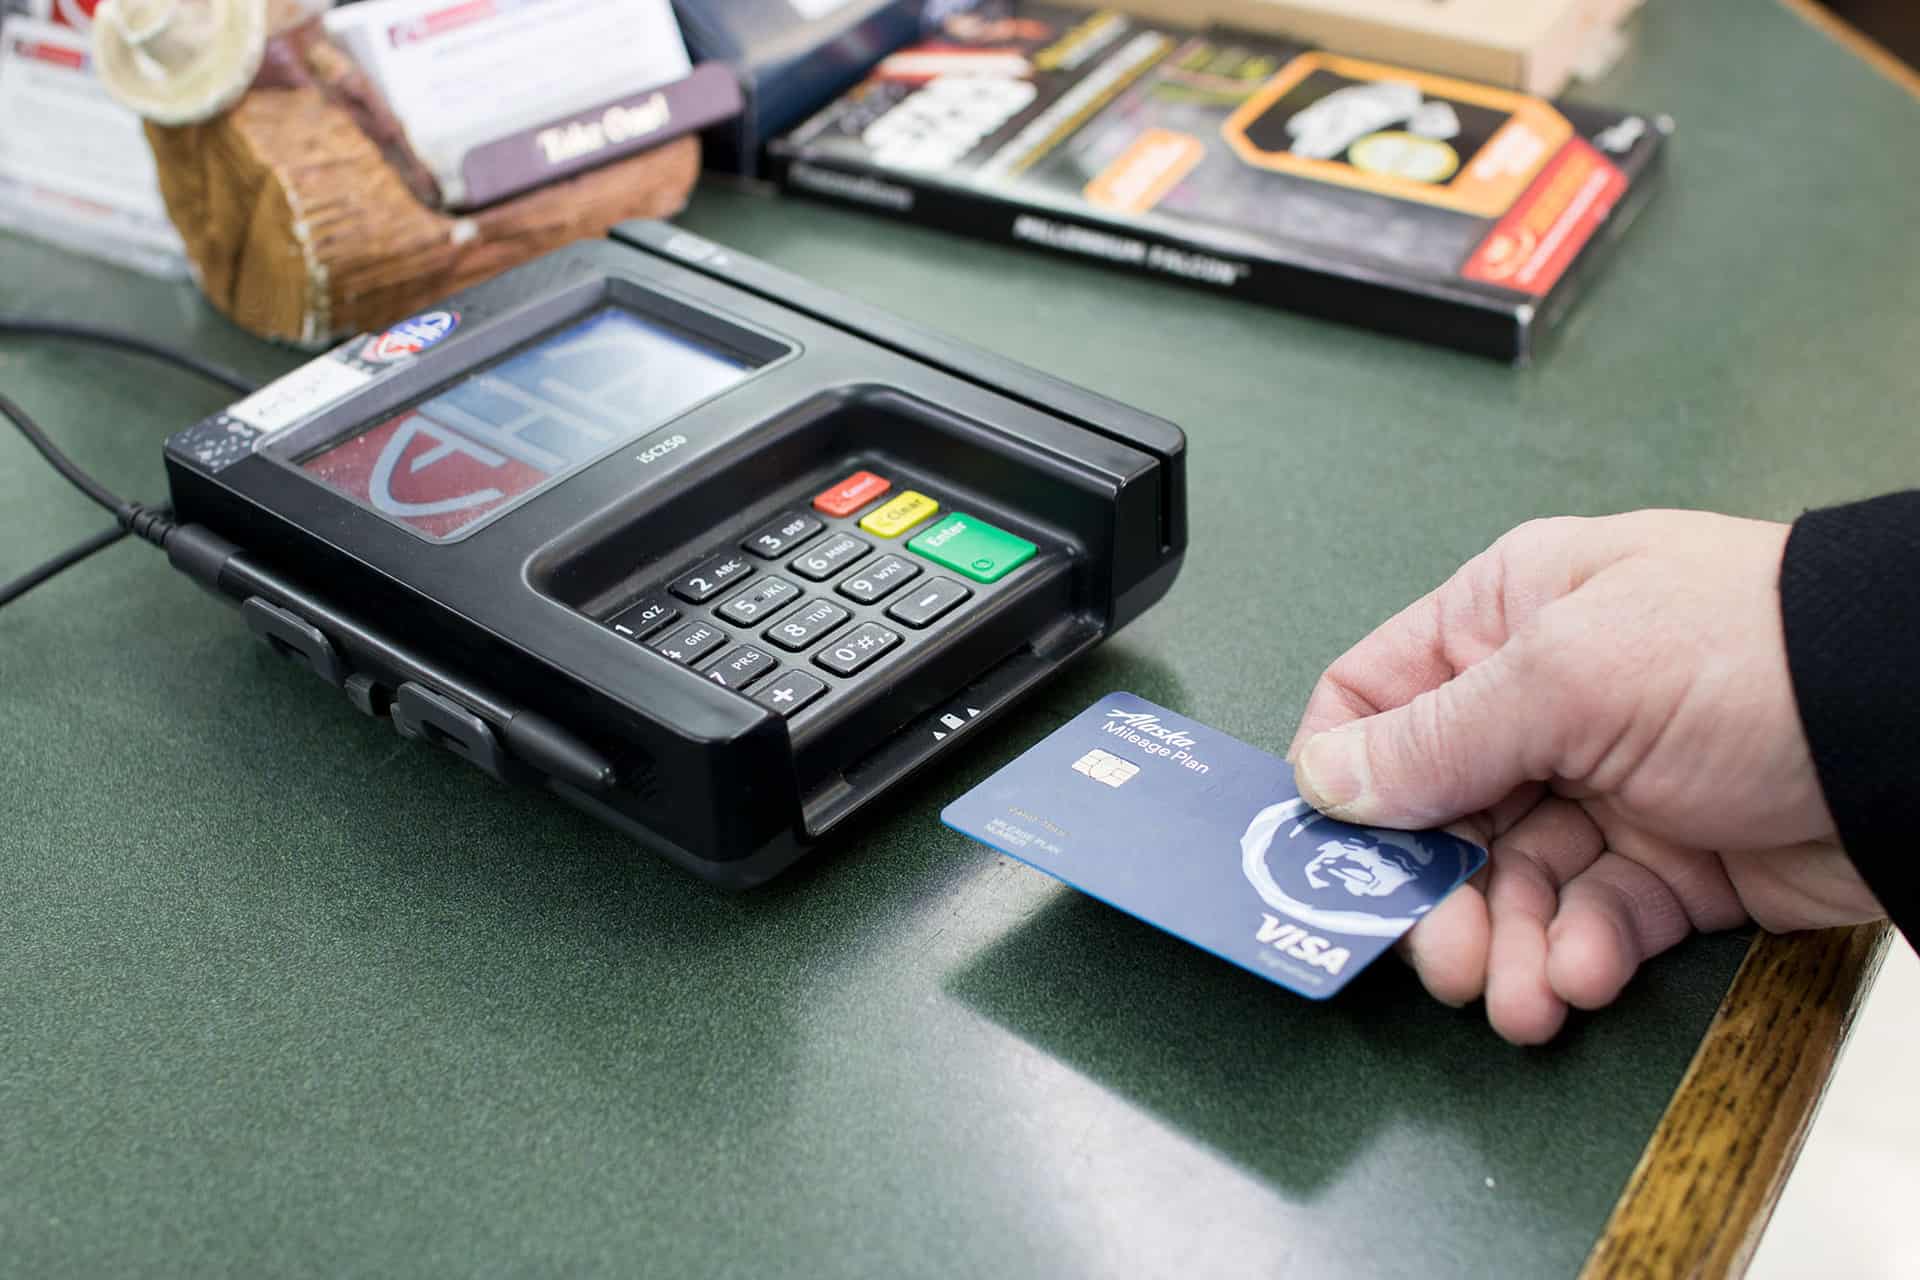 Entering chip debit/credit card